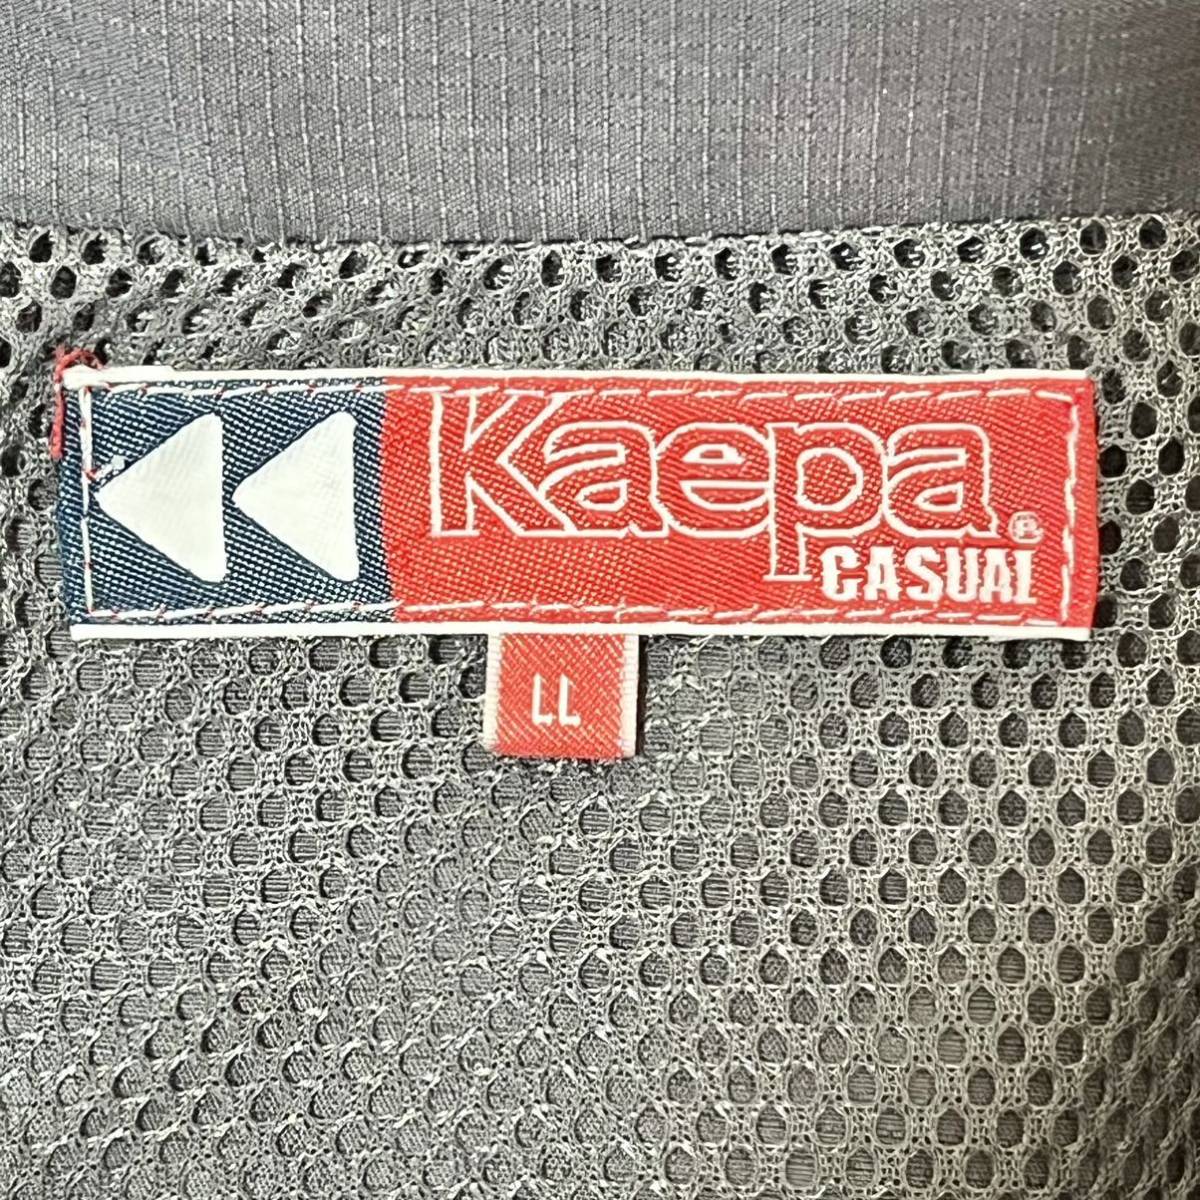 【kaepa】ケイパ ウインドブレーカー ジャンパー グレー 灰色 スポーツウェア 運動着 雨具 メッシュ生地 メンズ サイズLL / 9455PP_画像8